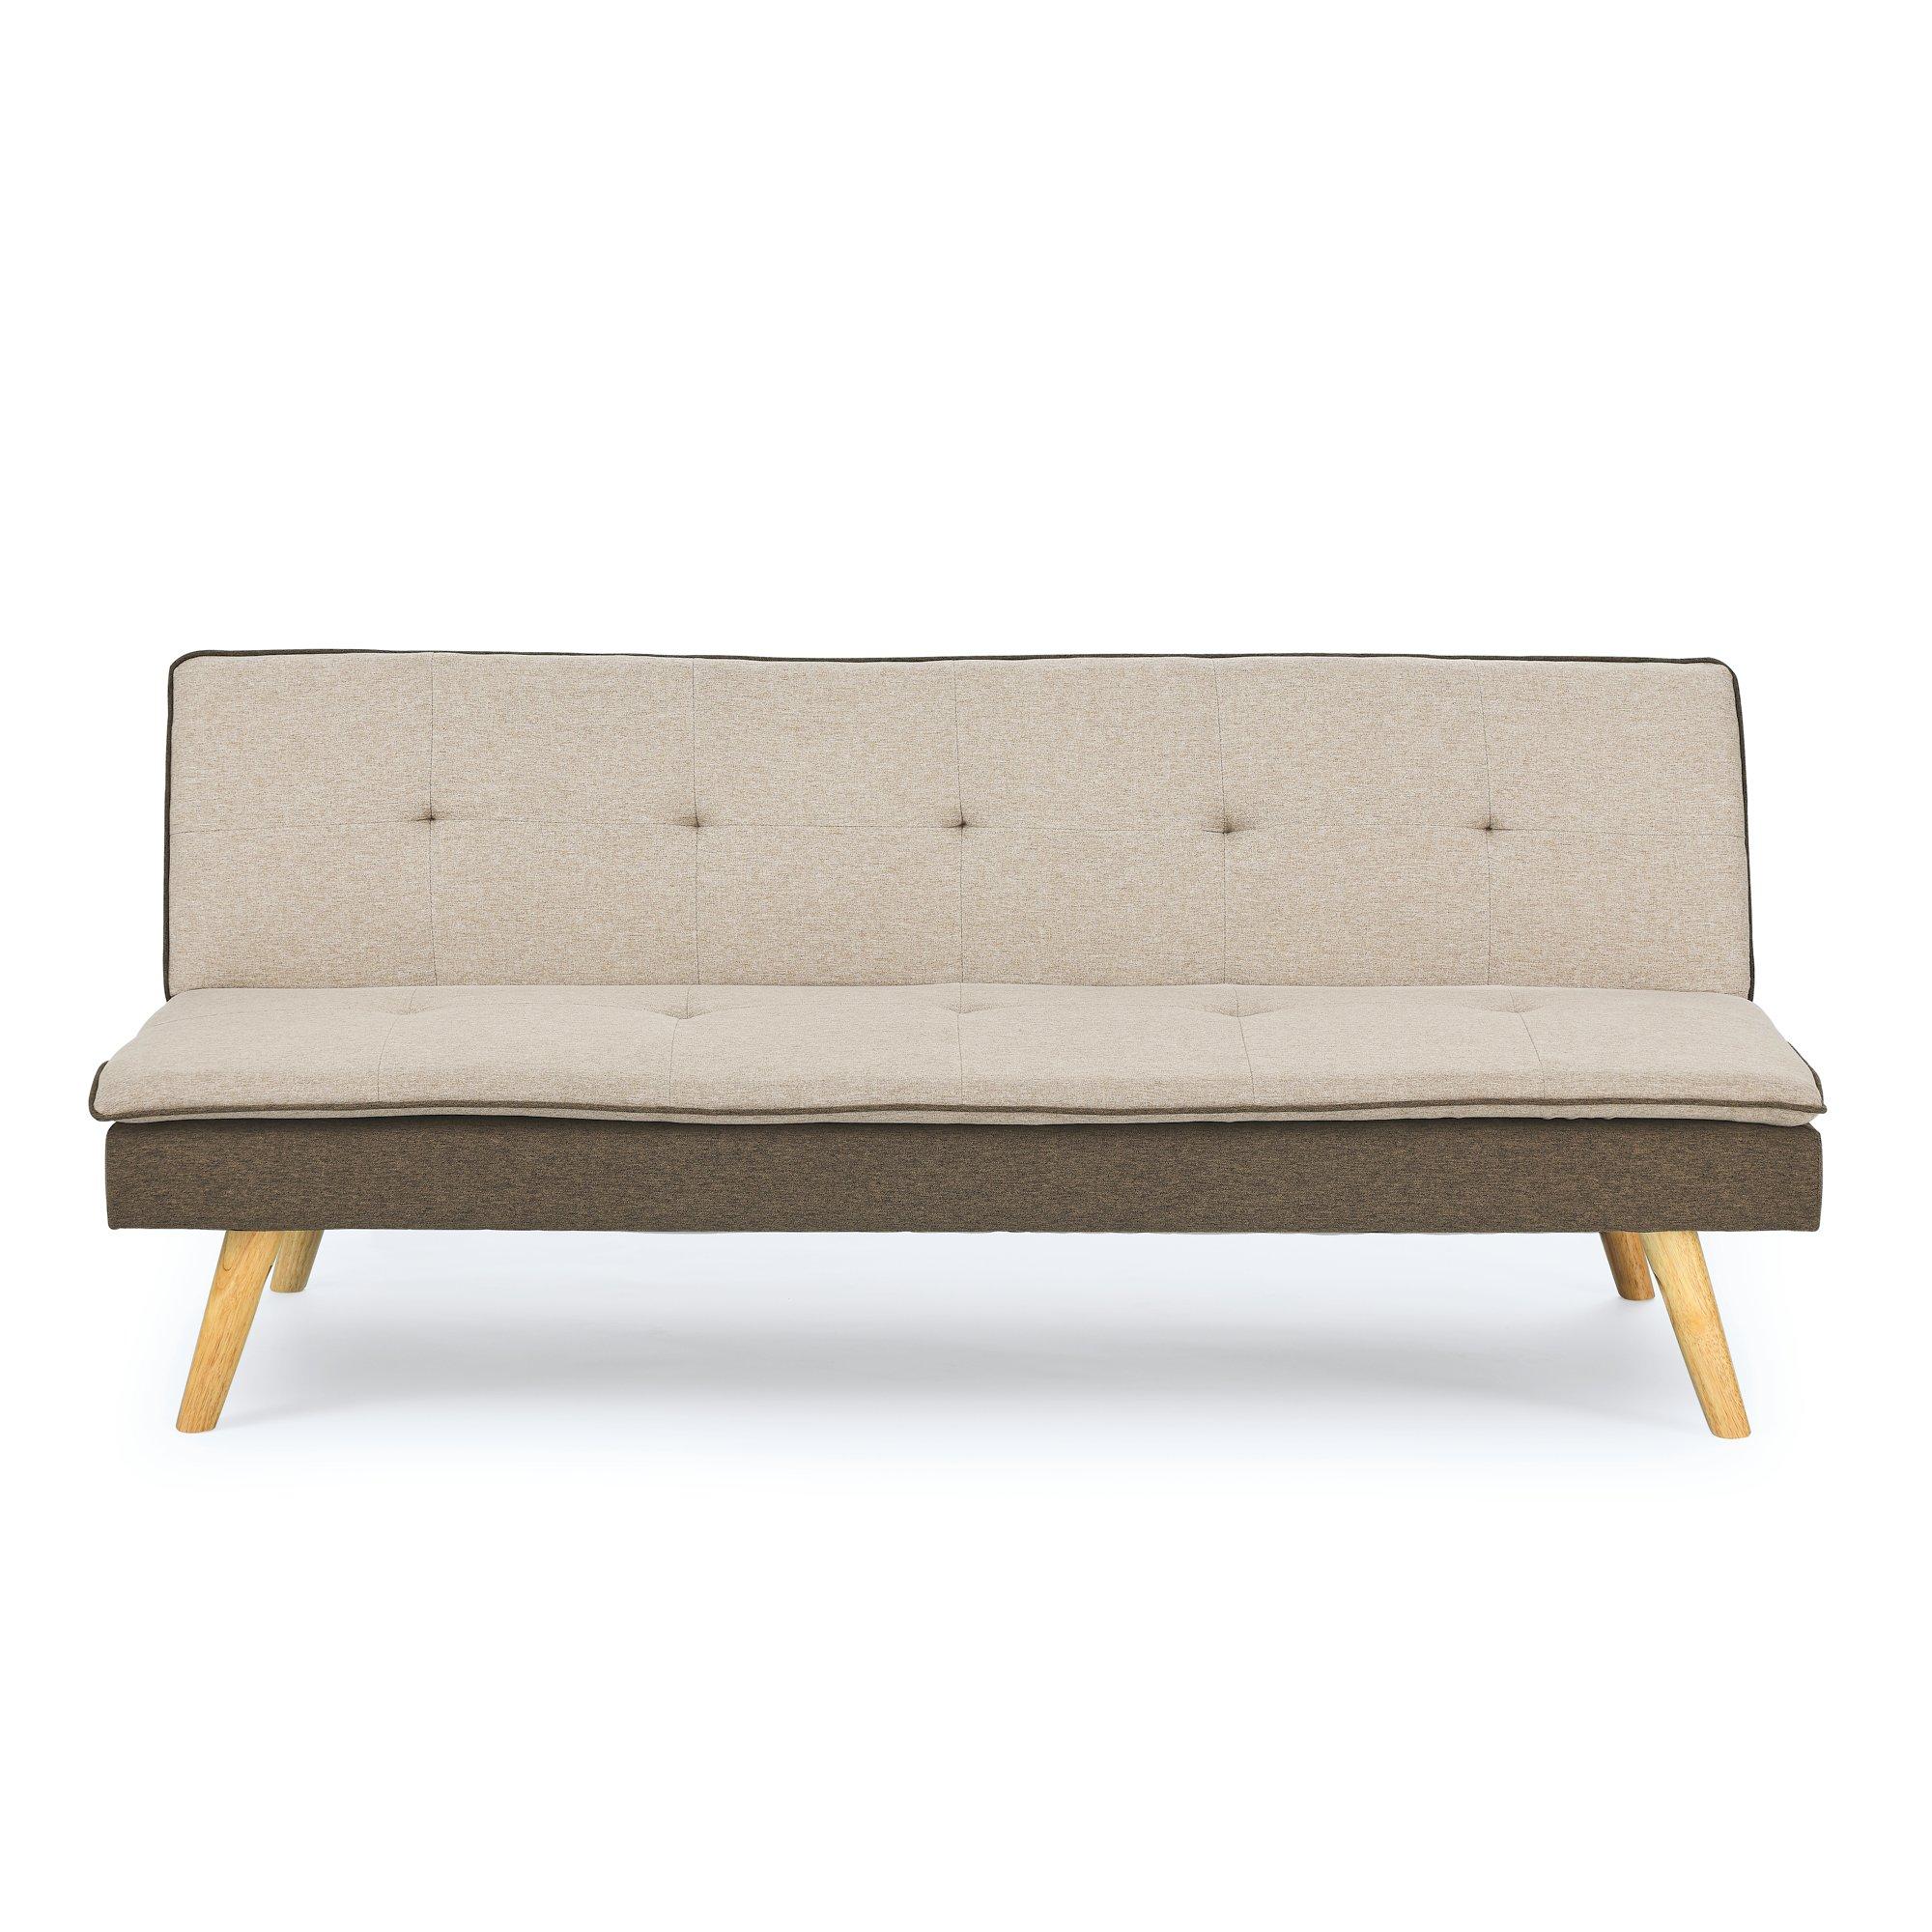 Zuma Versatile 3 Seater Fabric Padded Sofa Bed